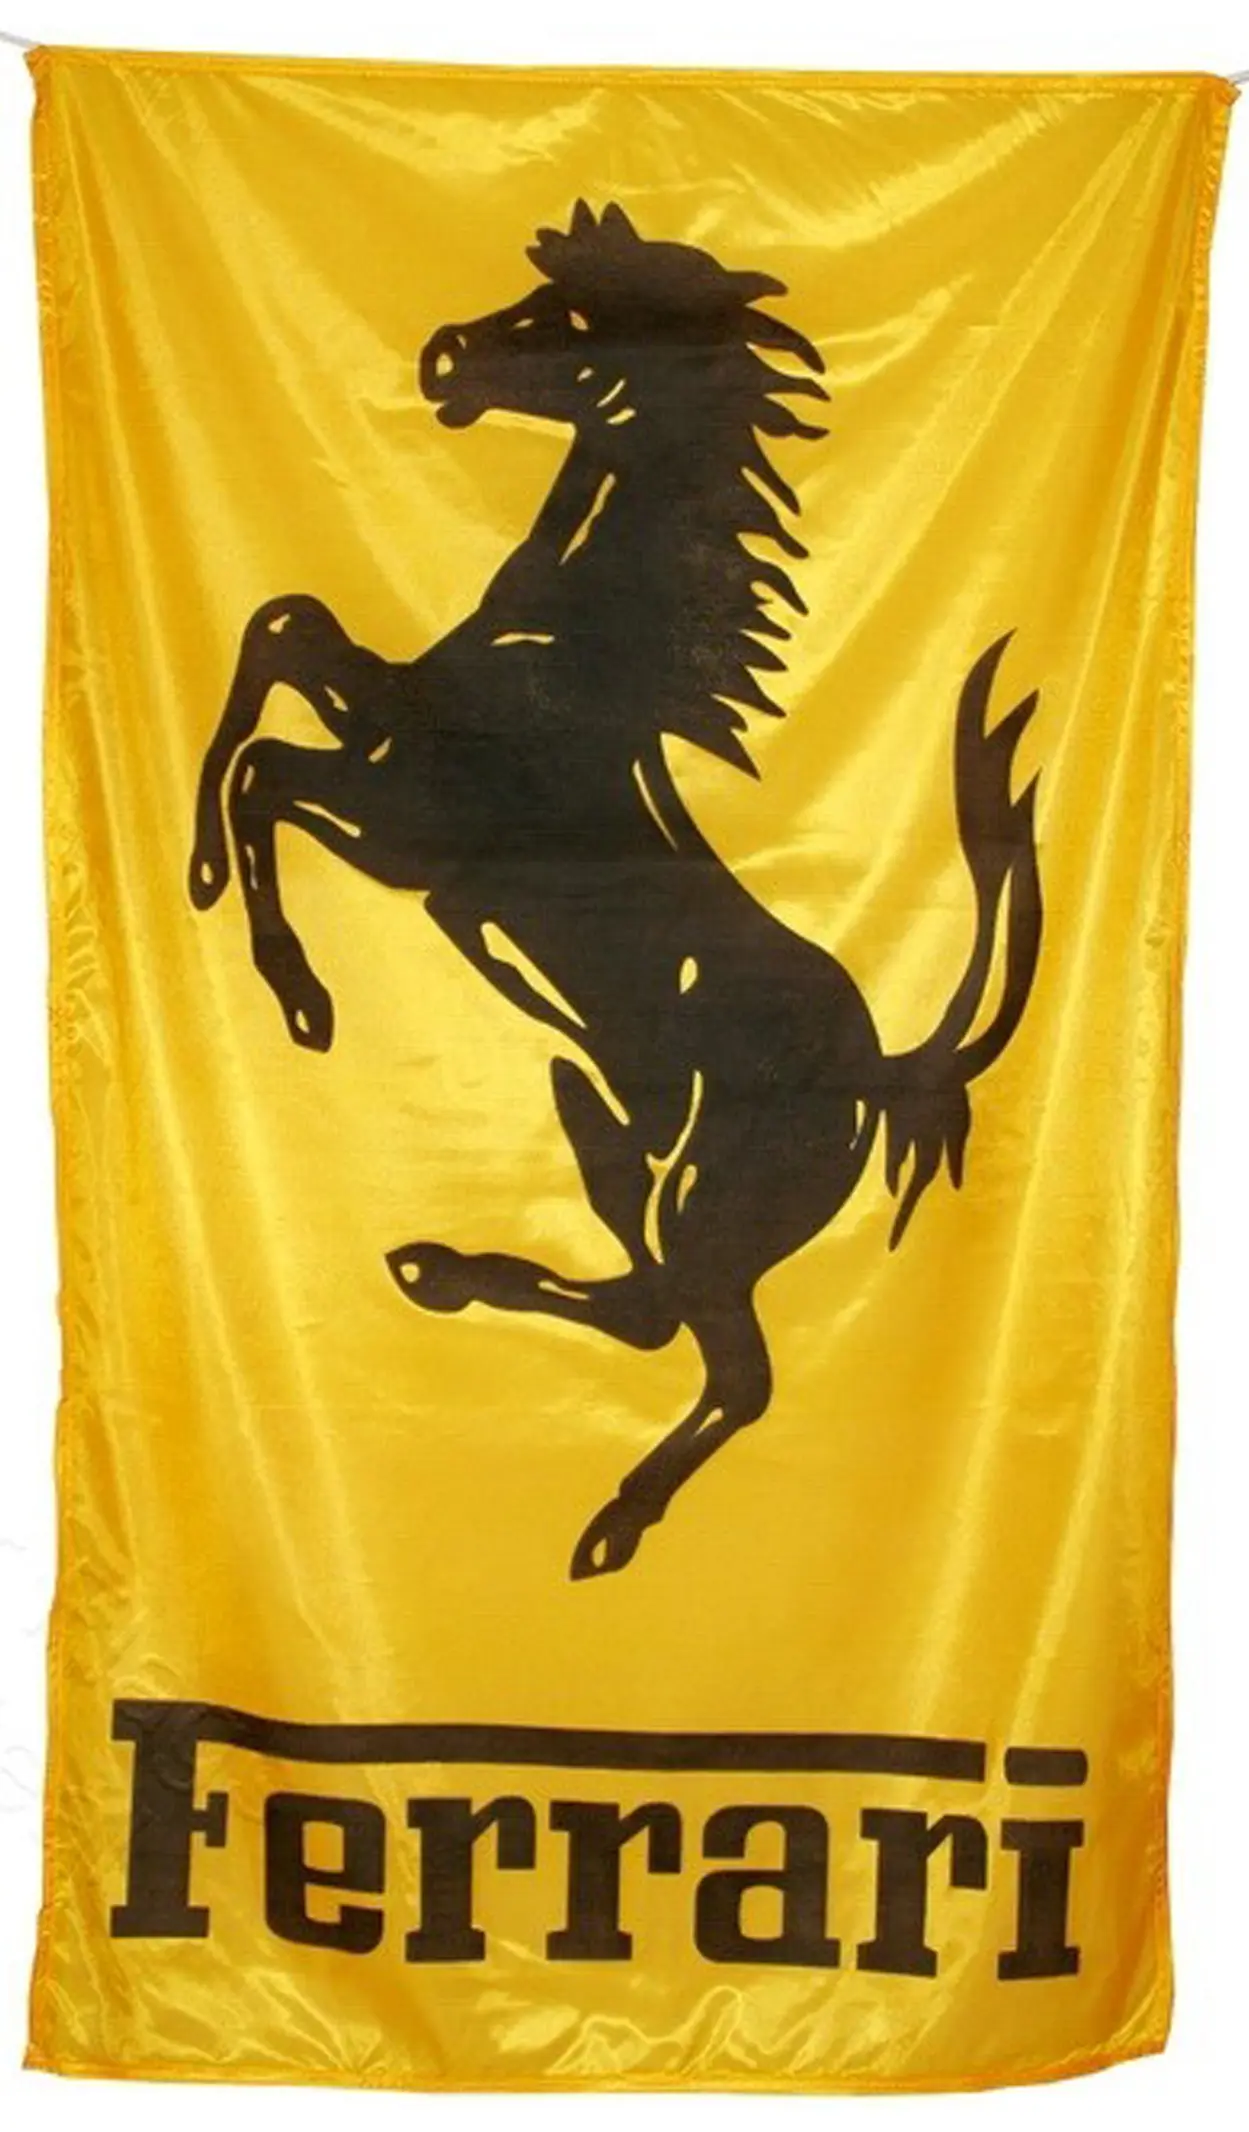 Ferrari Vertical Golden Flag / Banner 5 X 3 Ft (150 x 90 cm)